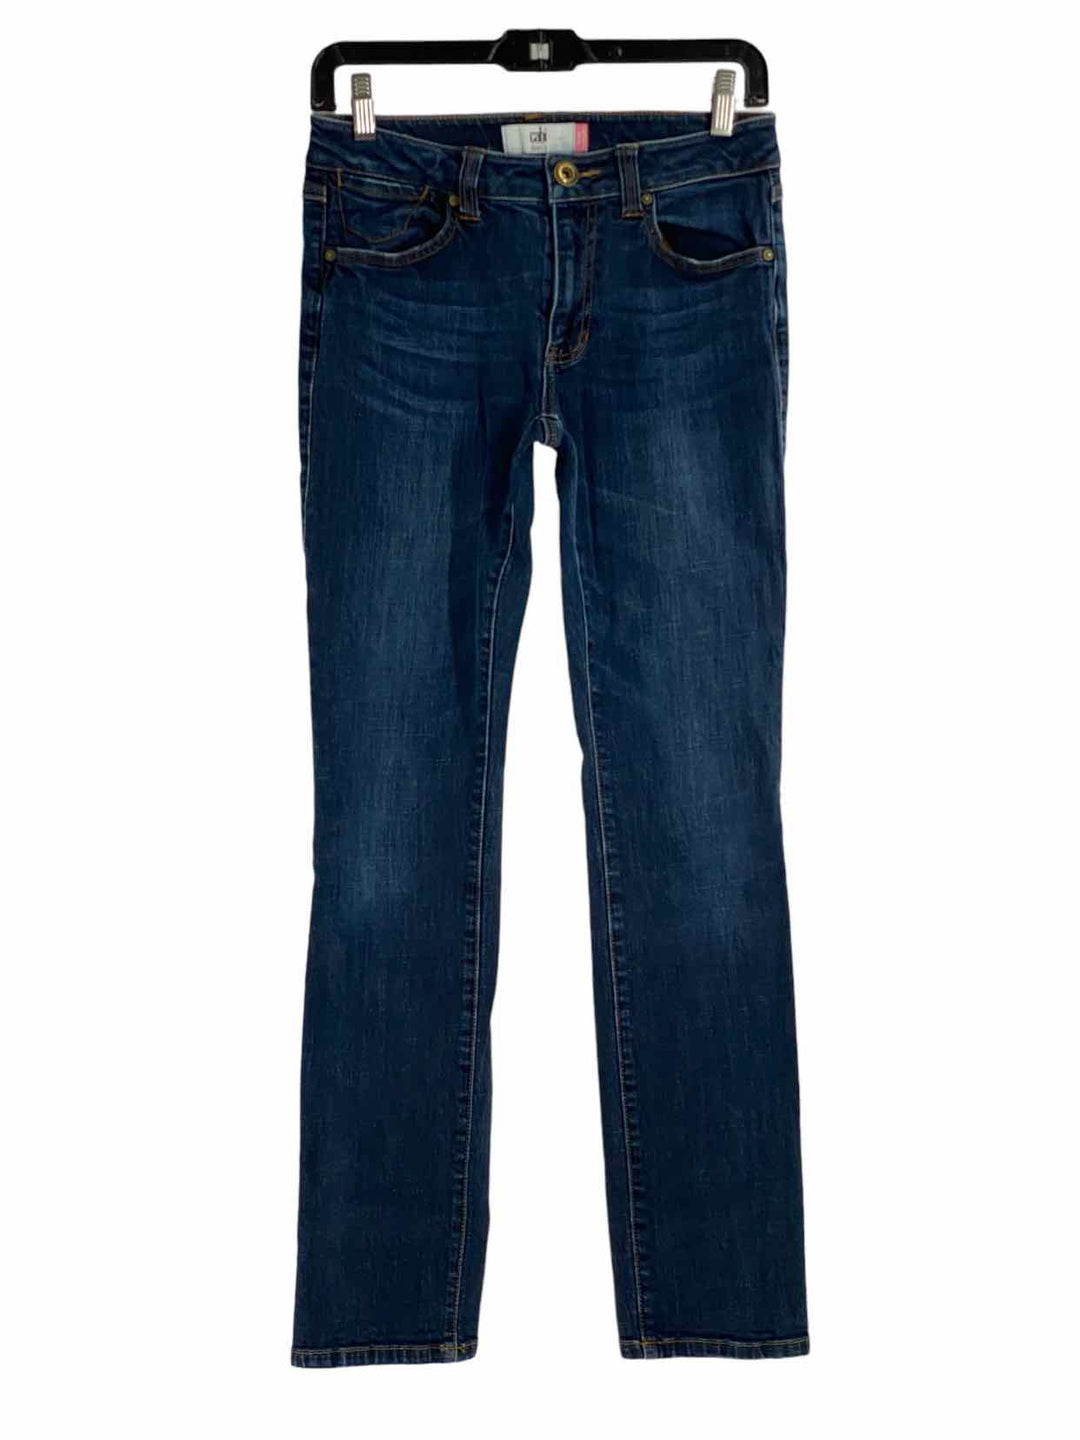 Cabi Size 4 Blue Denim Jeans